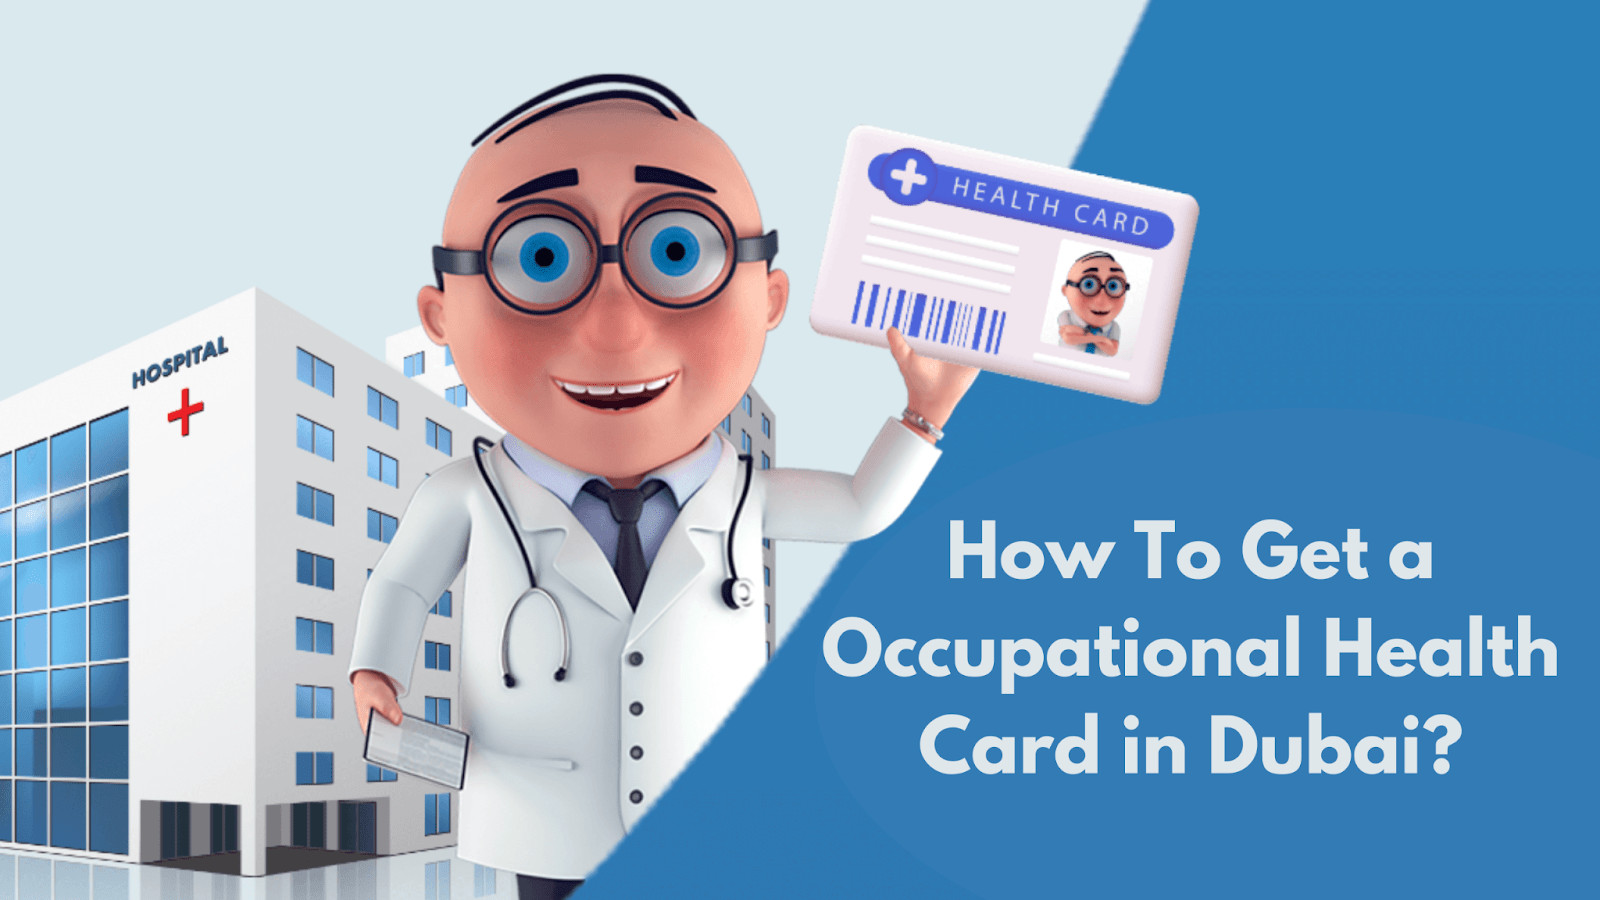 Occupational Health Card